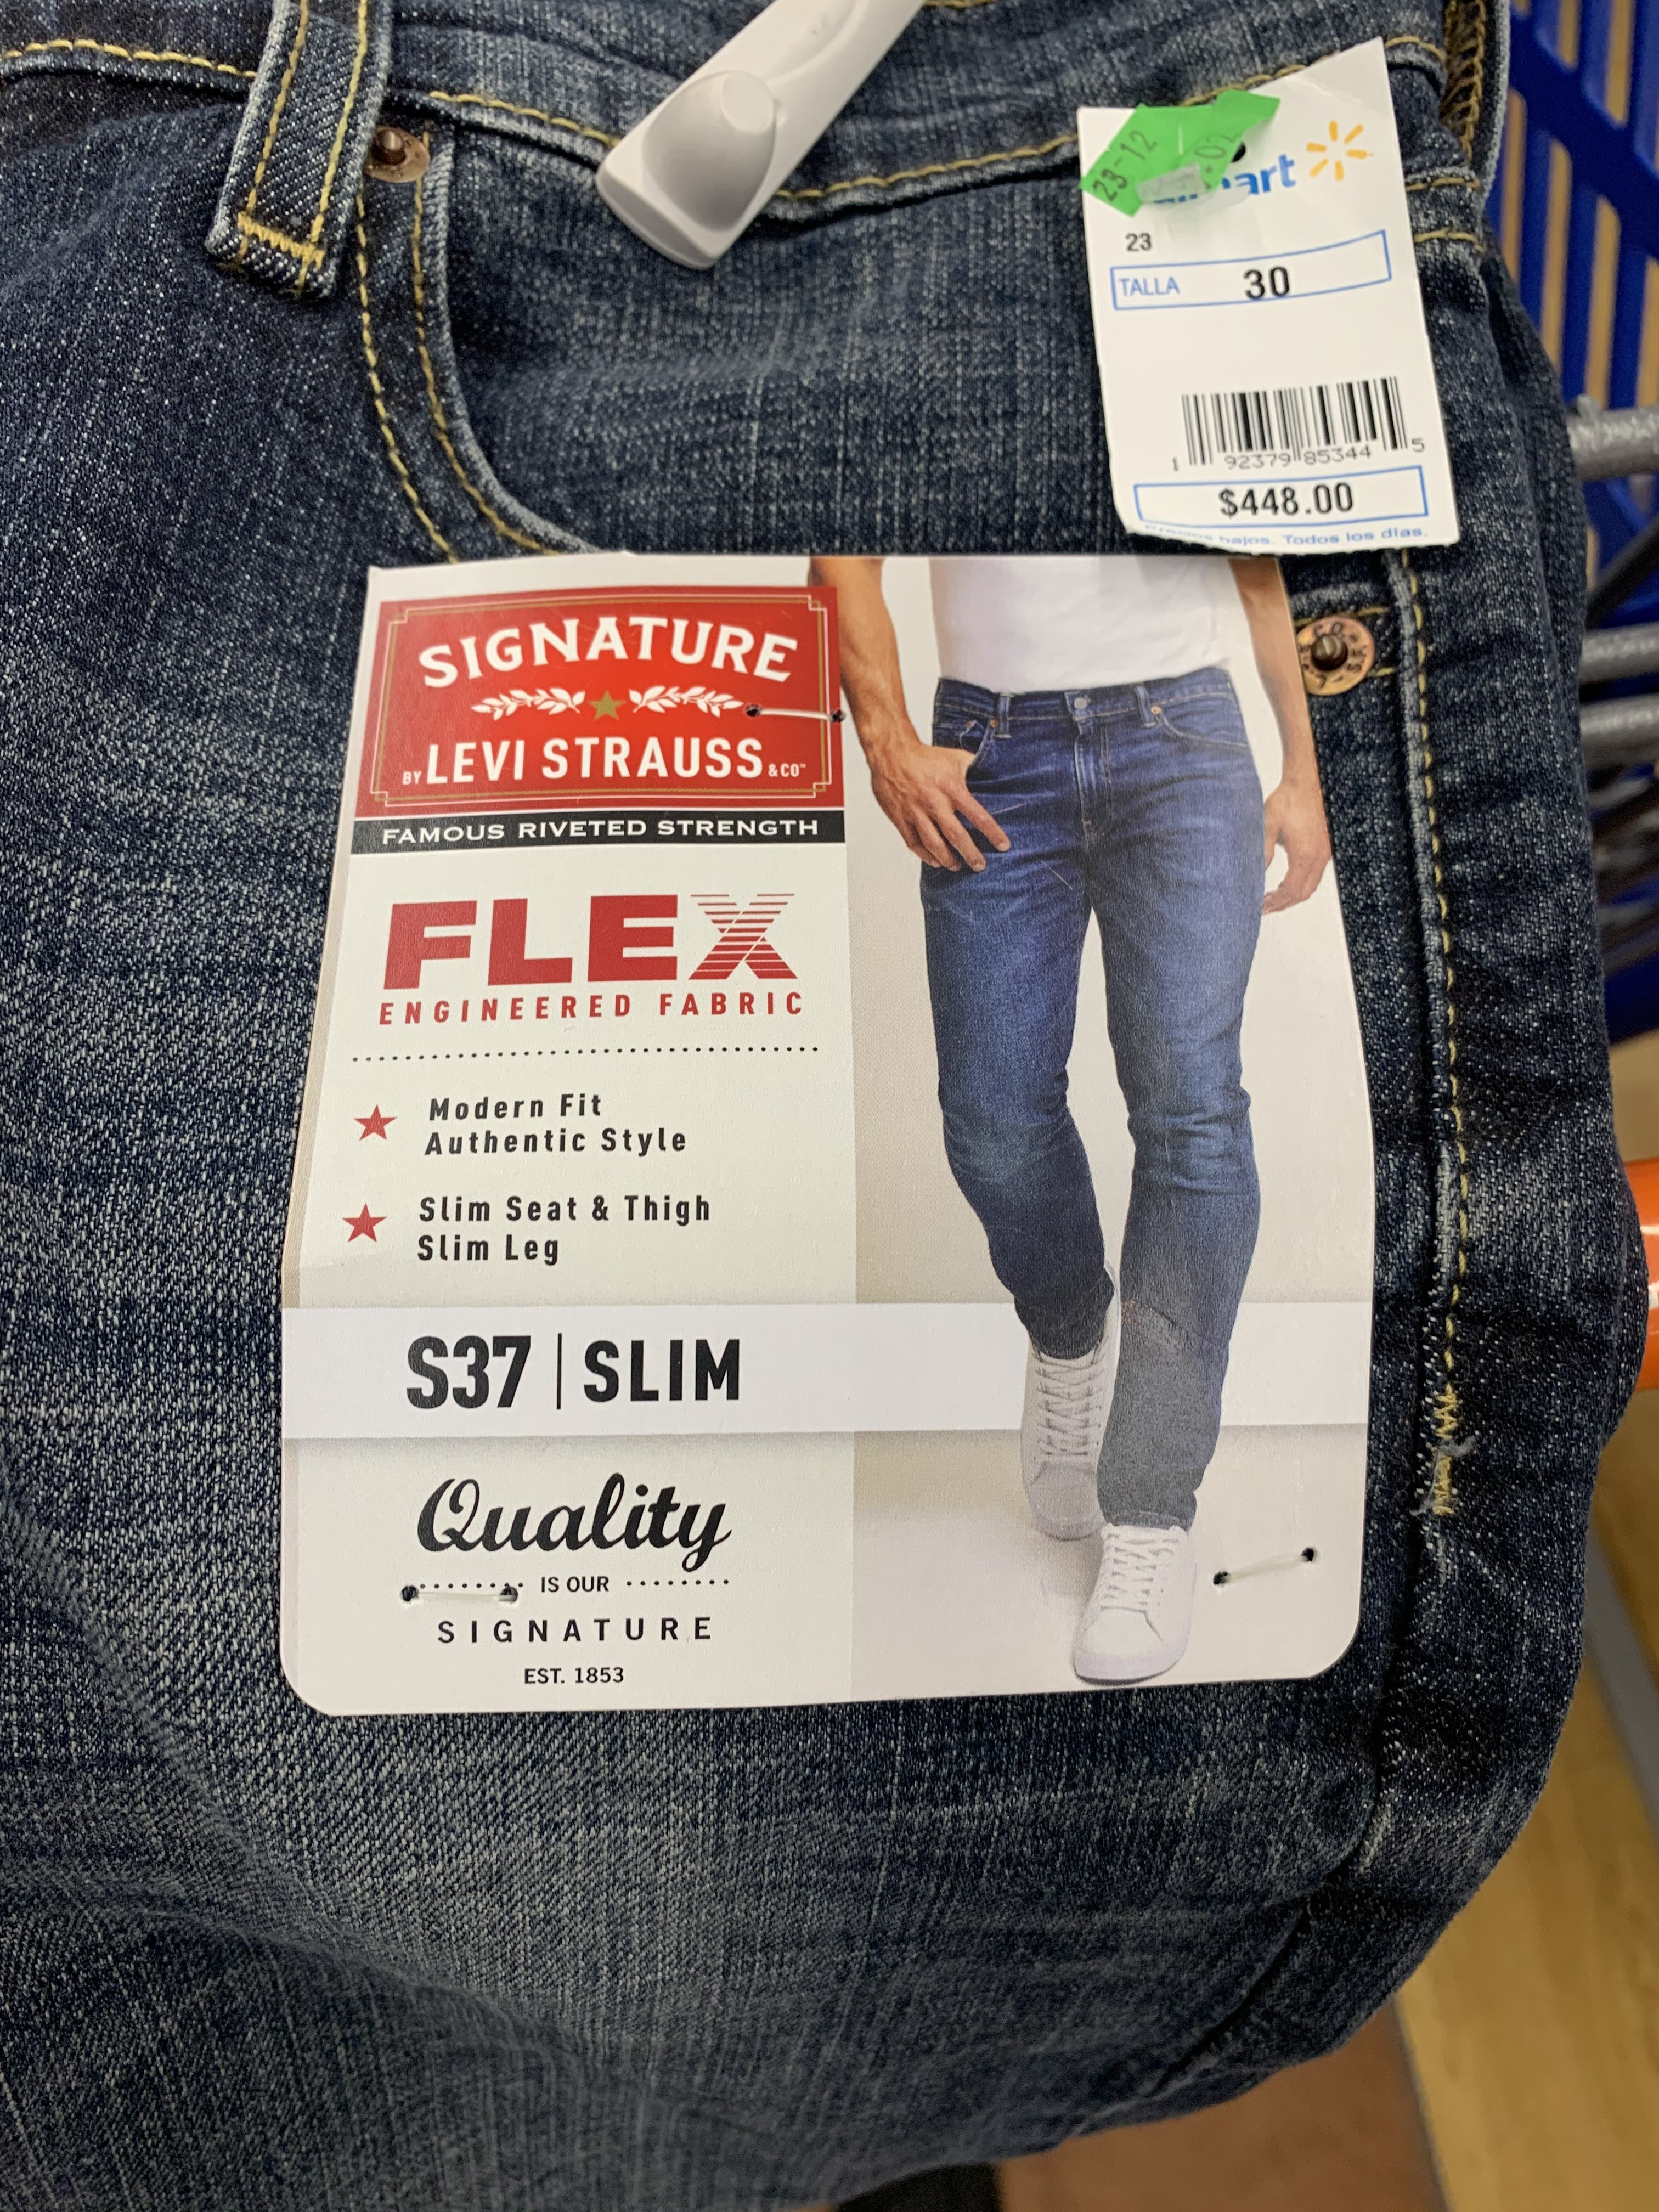 Pantalones Signature Walmart Best Sale, SAVE 55% 